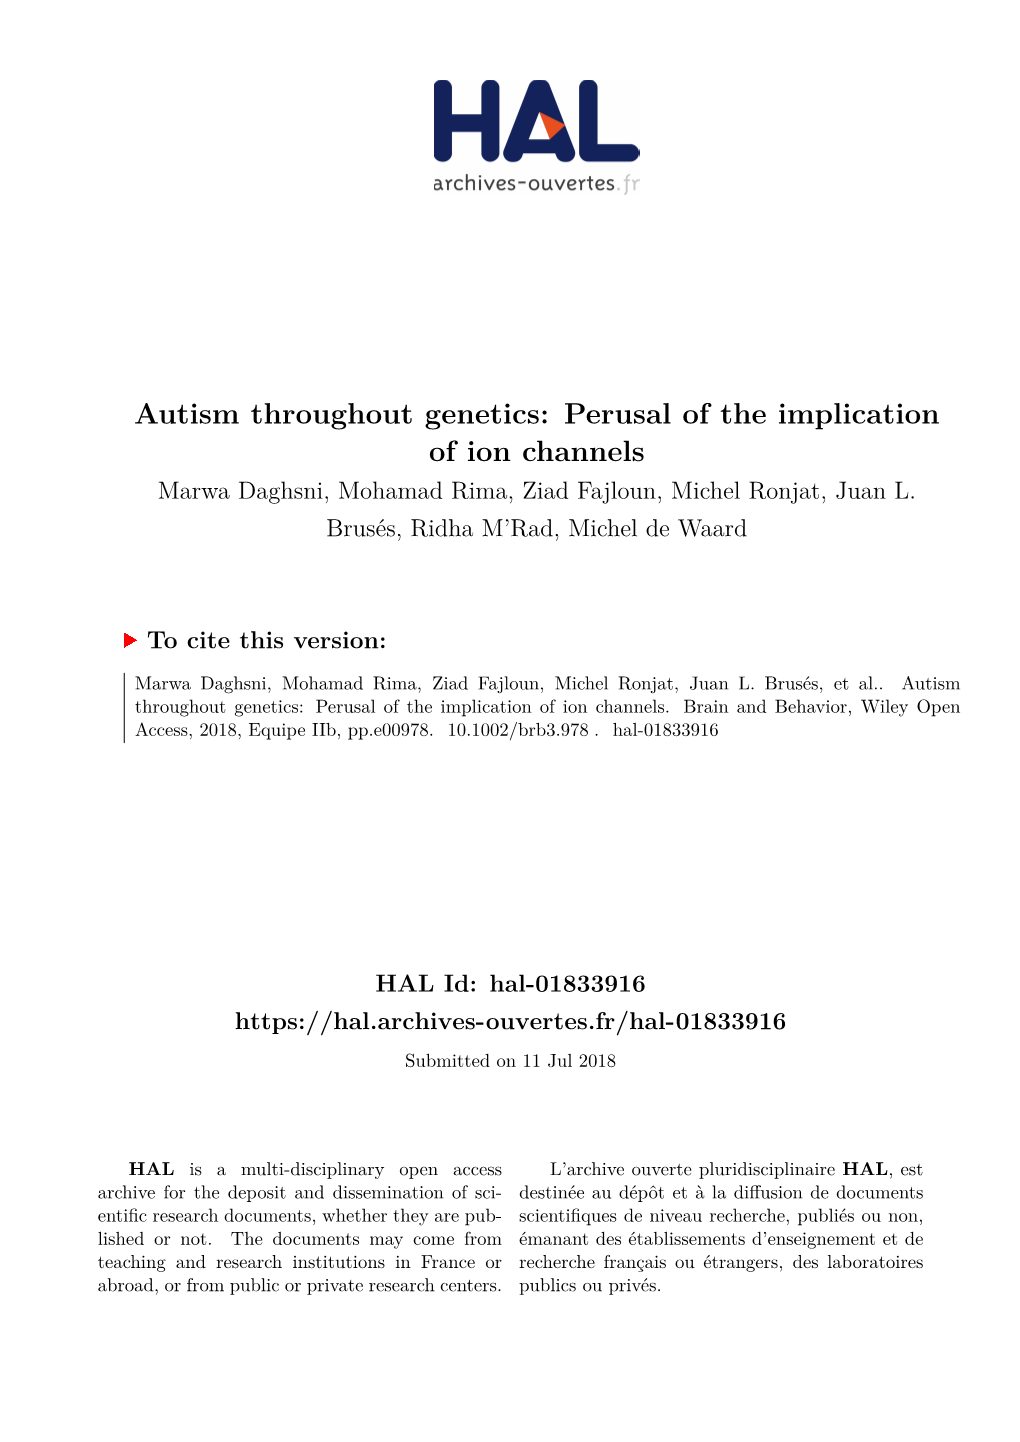 Autism Throughout Genetics: Perusal of the Implication of Ion Channels Marwa Daghsni, Mohamad Rima, Ziad Fajloun, Michel Ronjat, Juan L